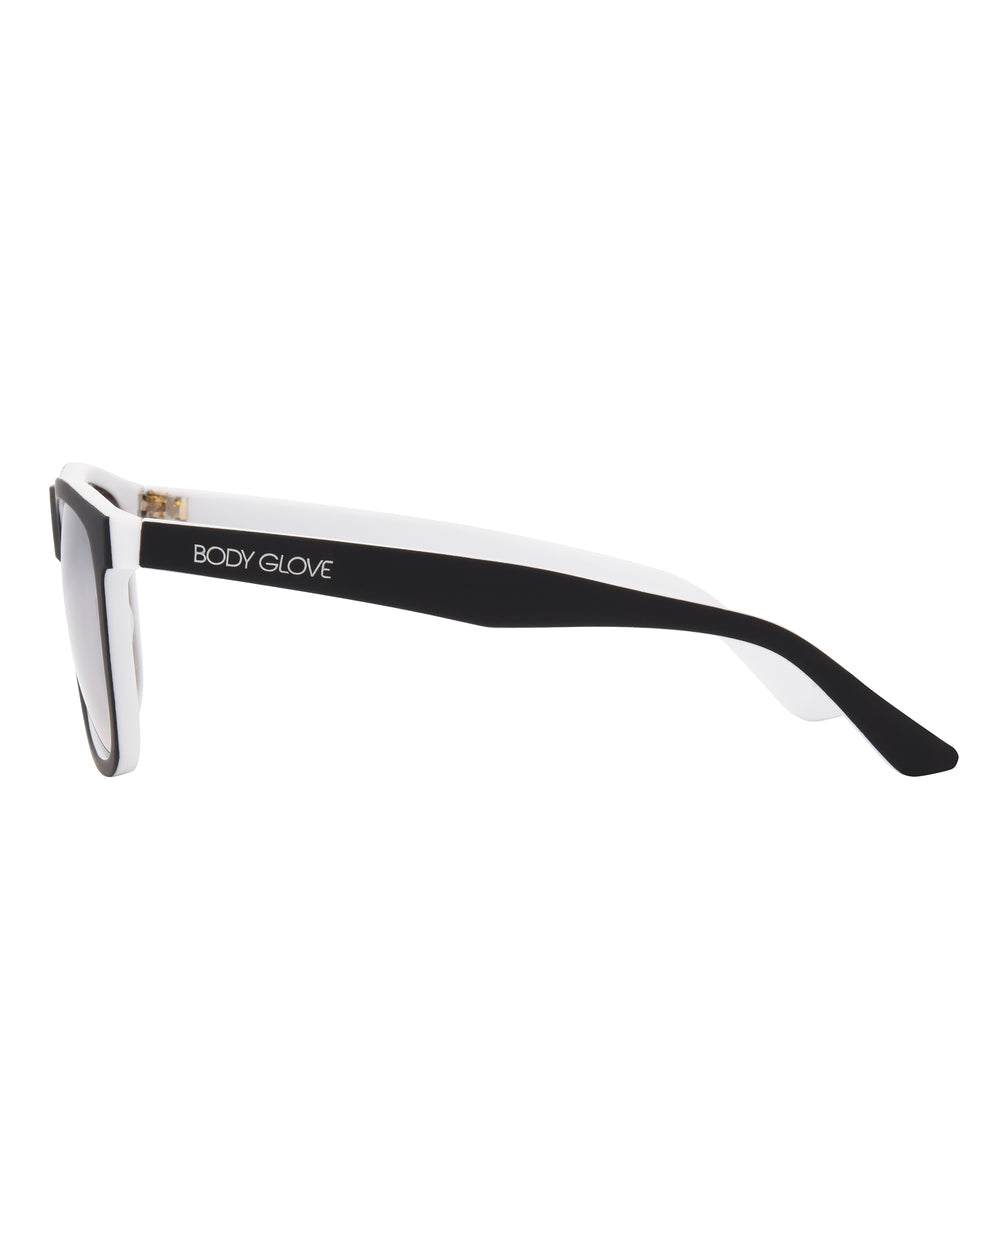 Talise Way-Style Frame Sunglasses - Black/White